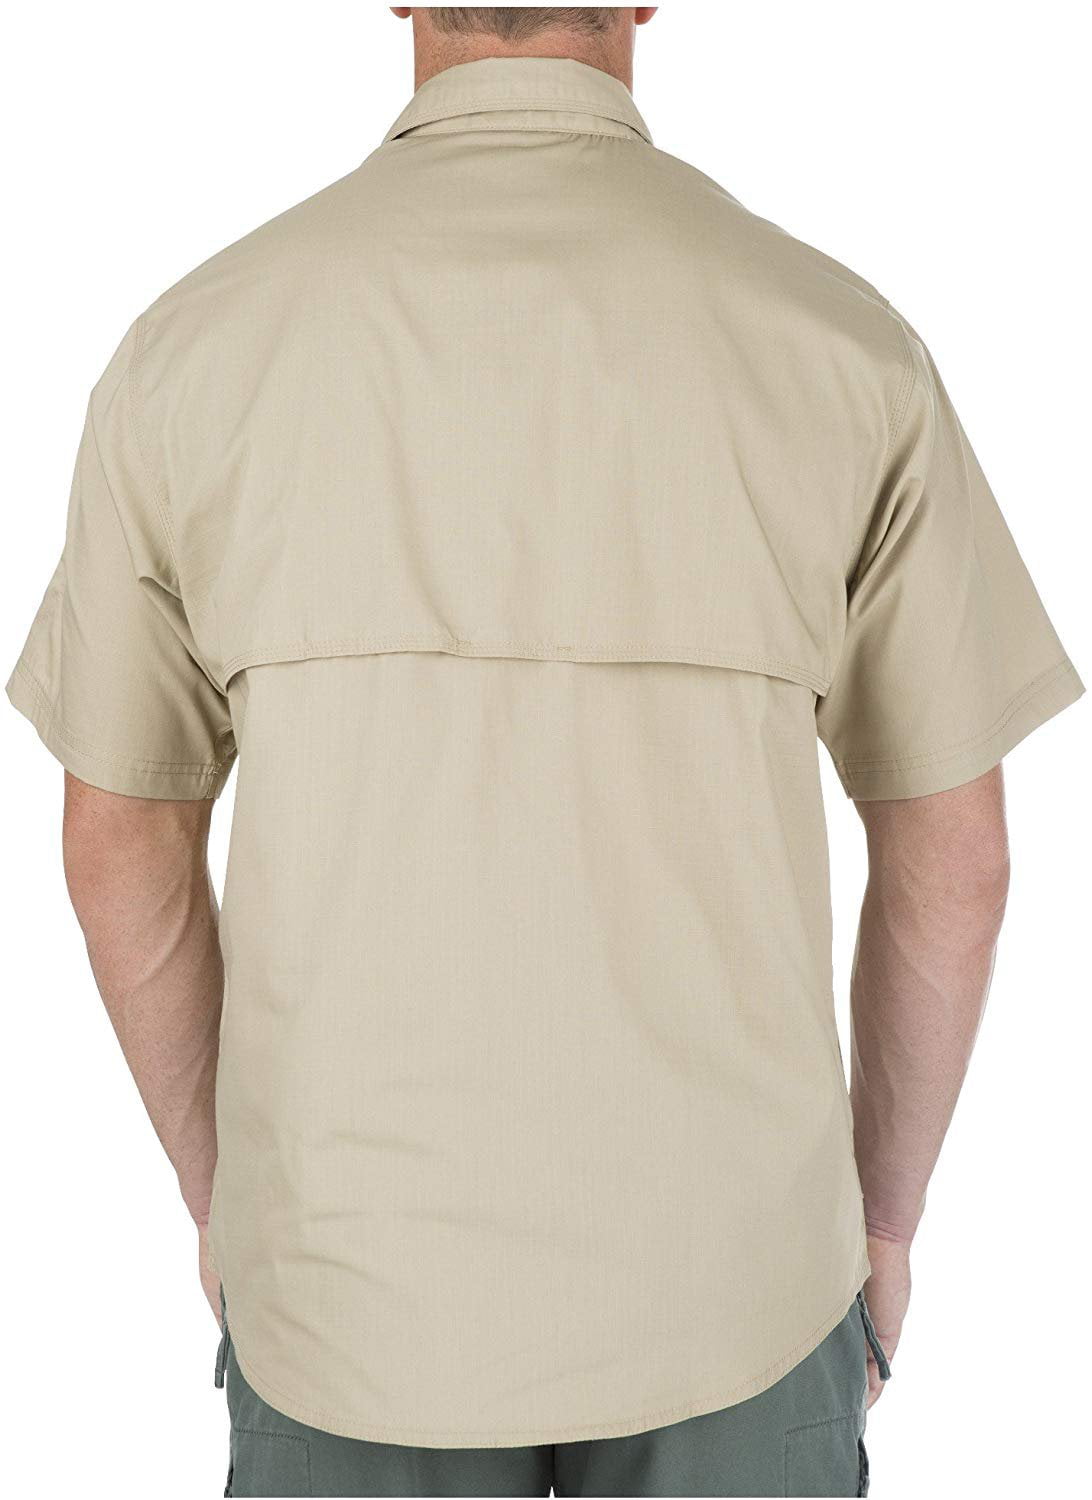 5.11 Tactical TacLite Pro Short Sleeve Shirt 71175 71175T 